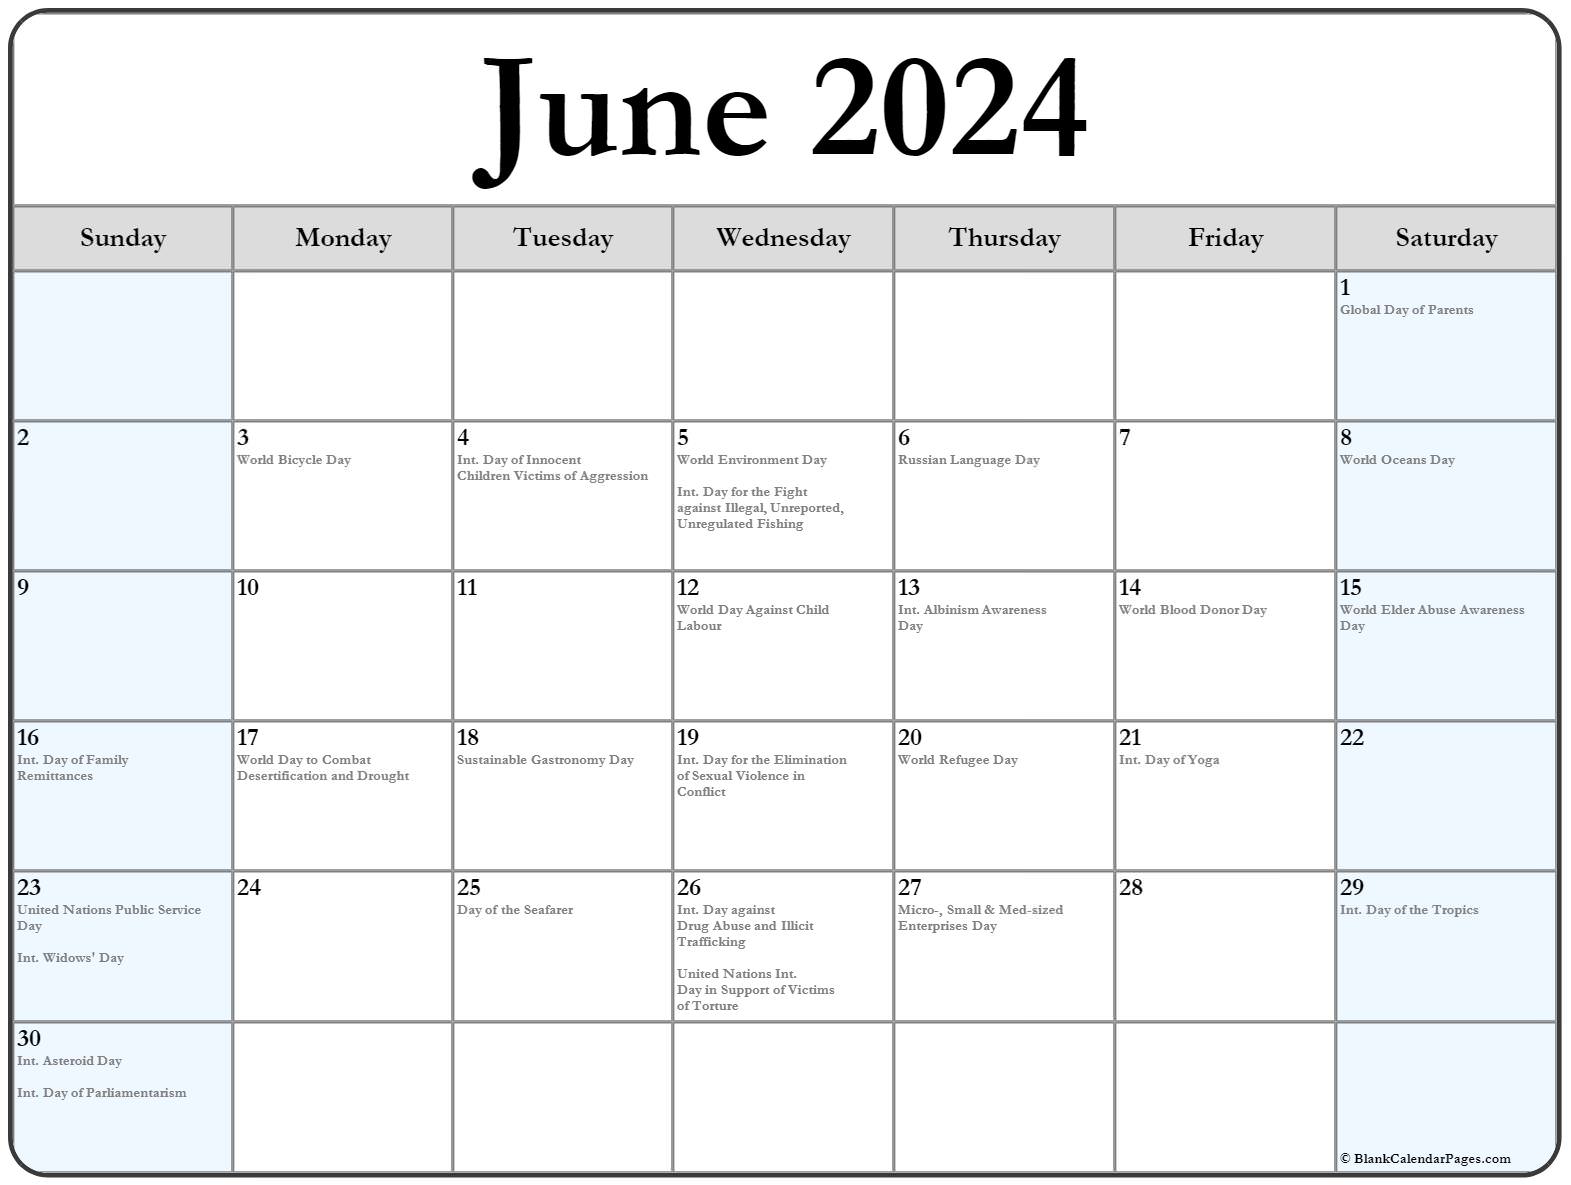 year-2022-calendars-calendar-quickly-june-2023-calendar-with-holidays